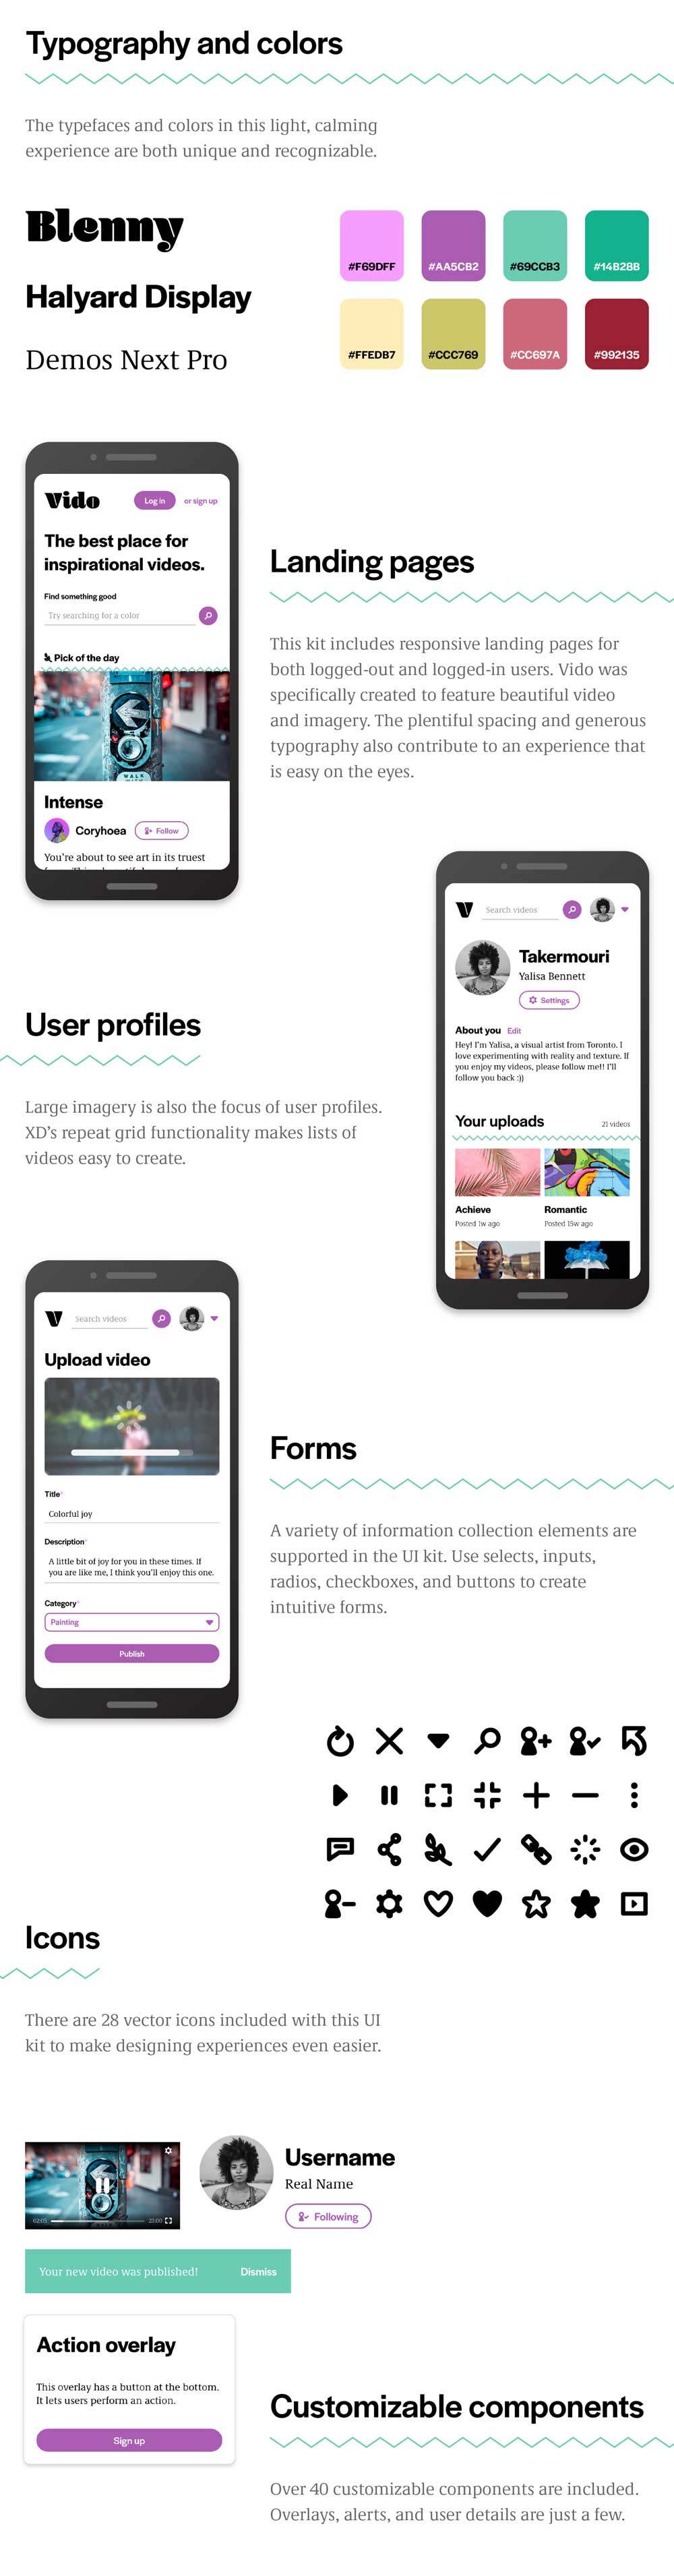 Social Media Video Experience Free UI Kit